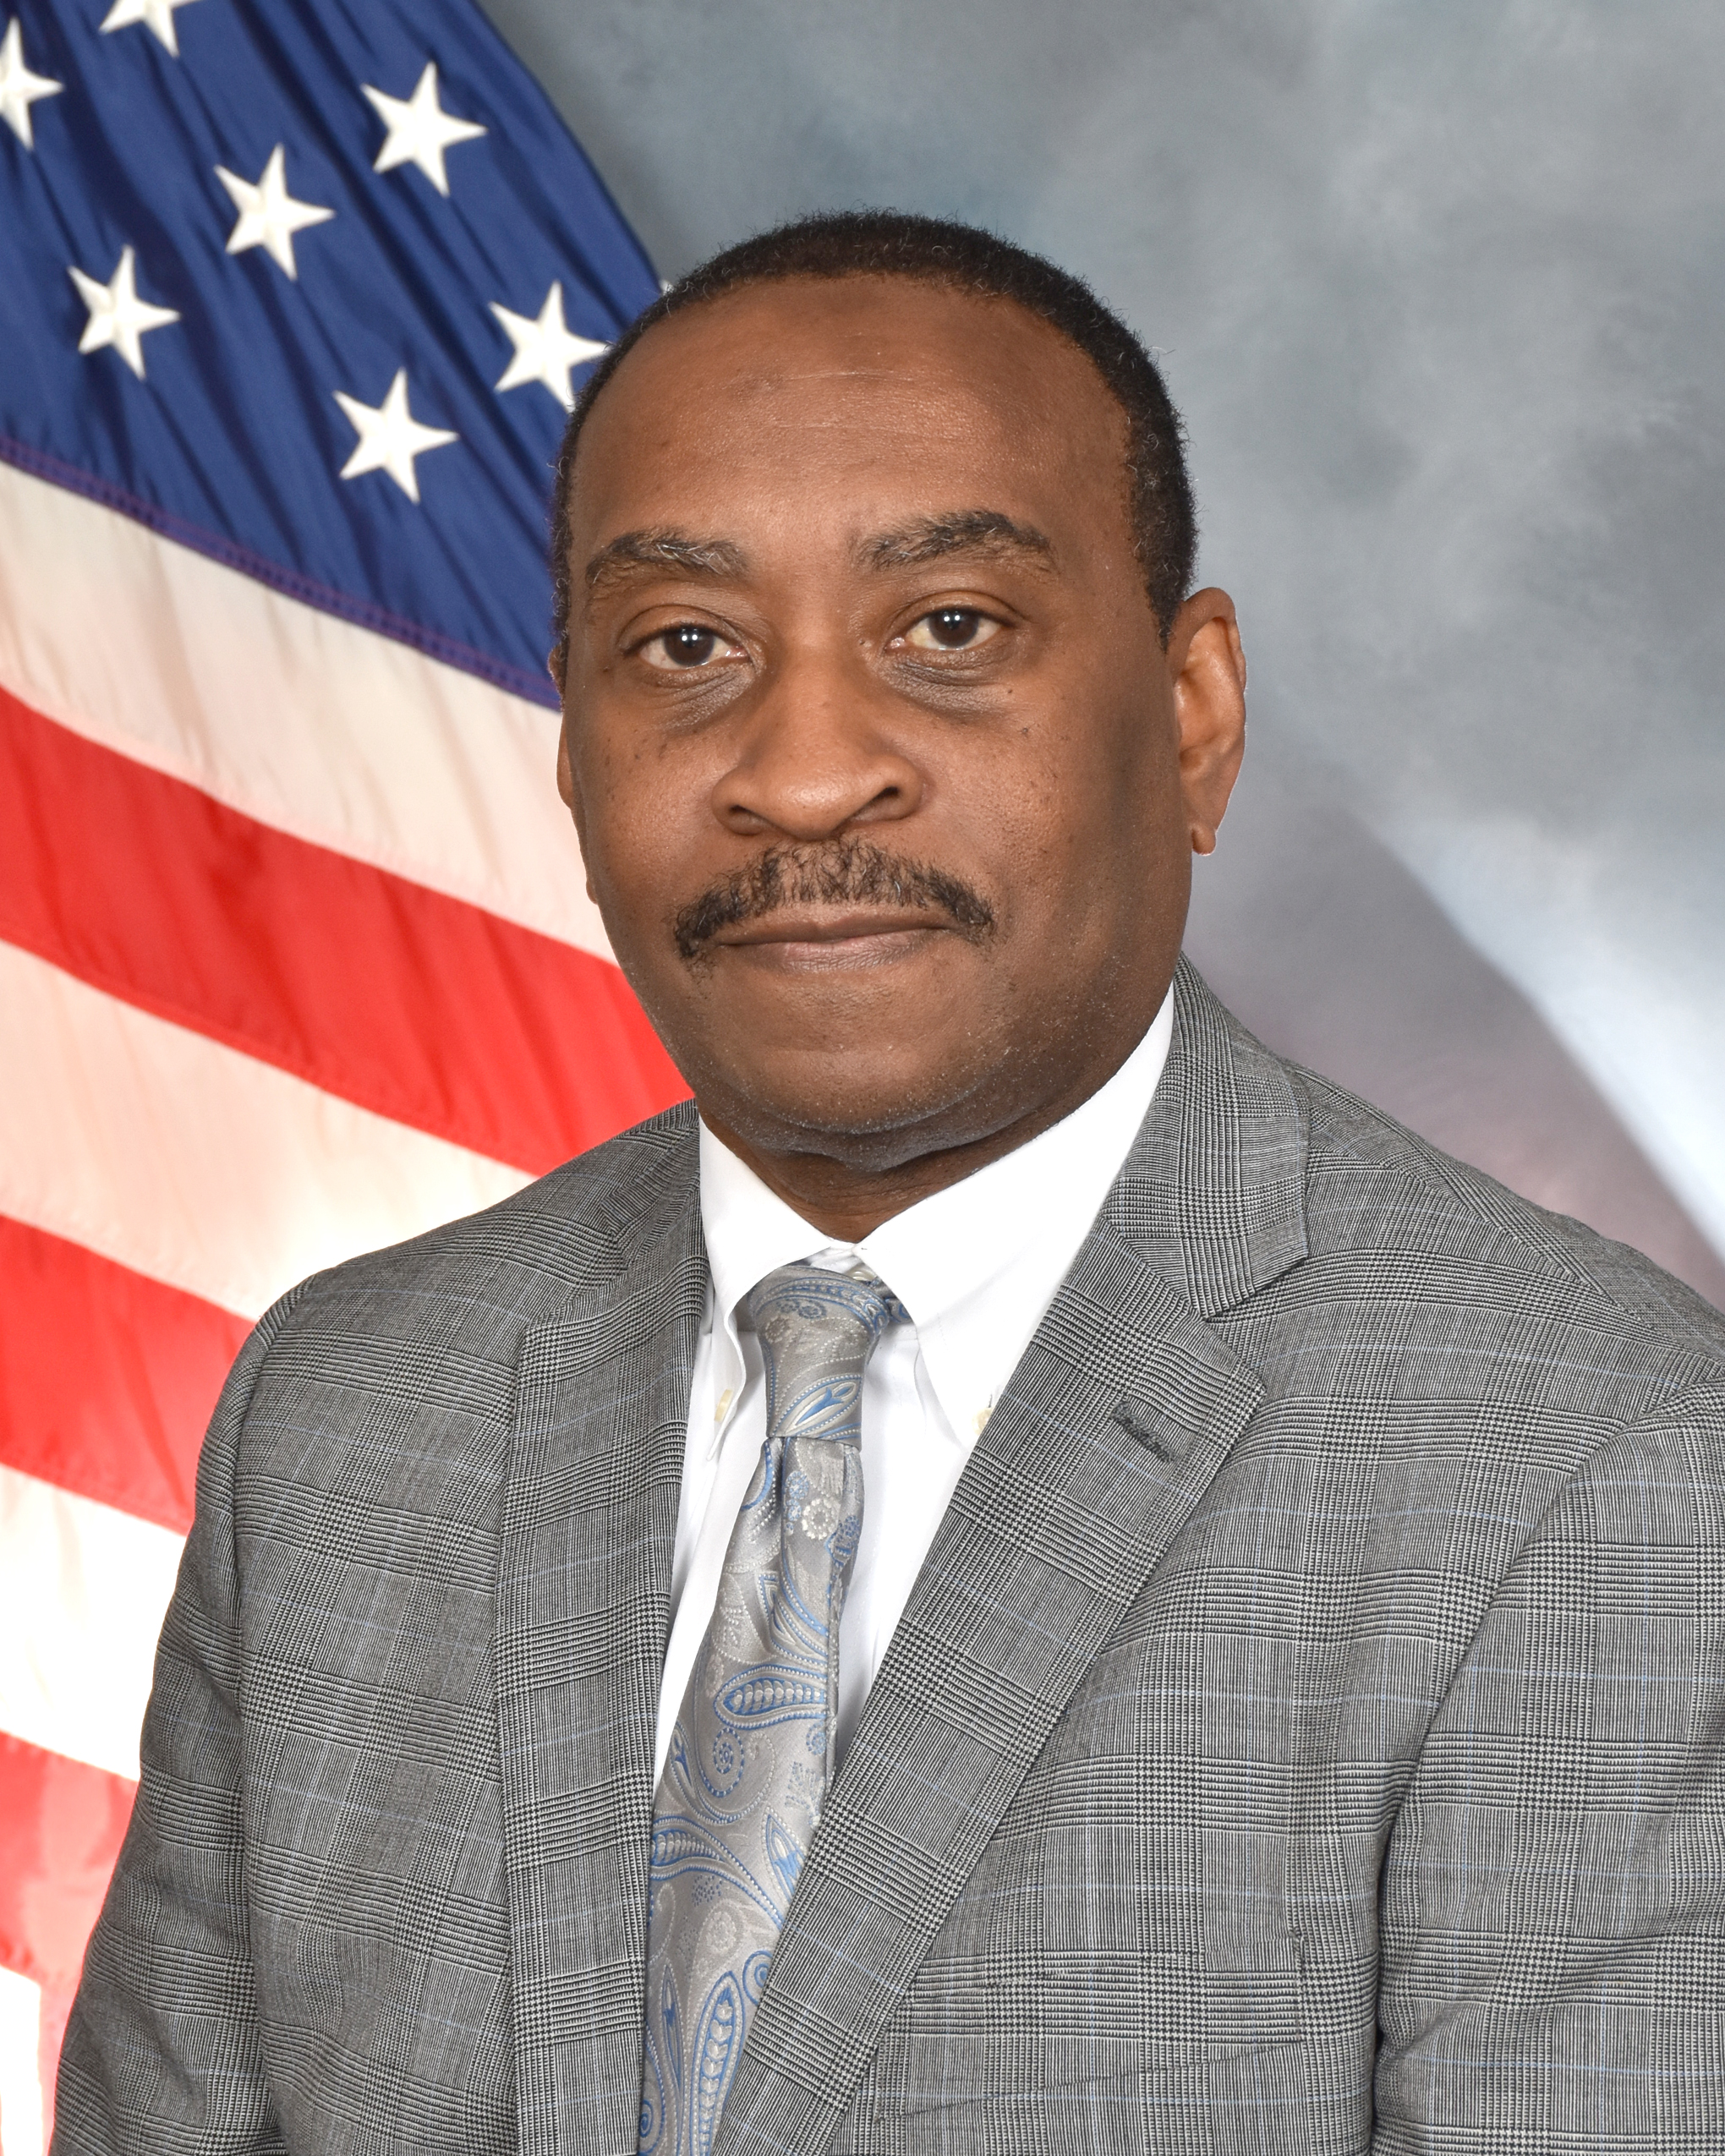 Deputy Chief of Administration - Mr. Albert Stokes